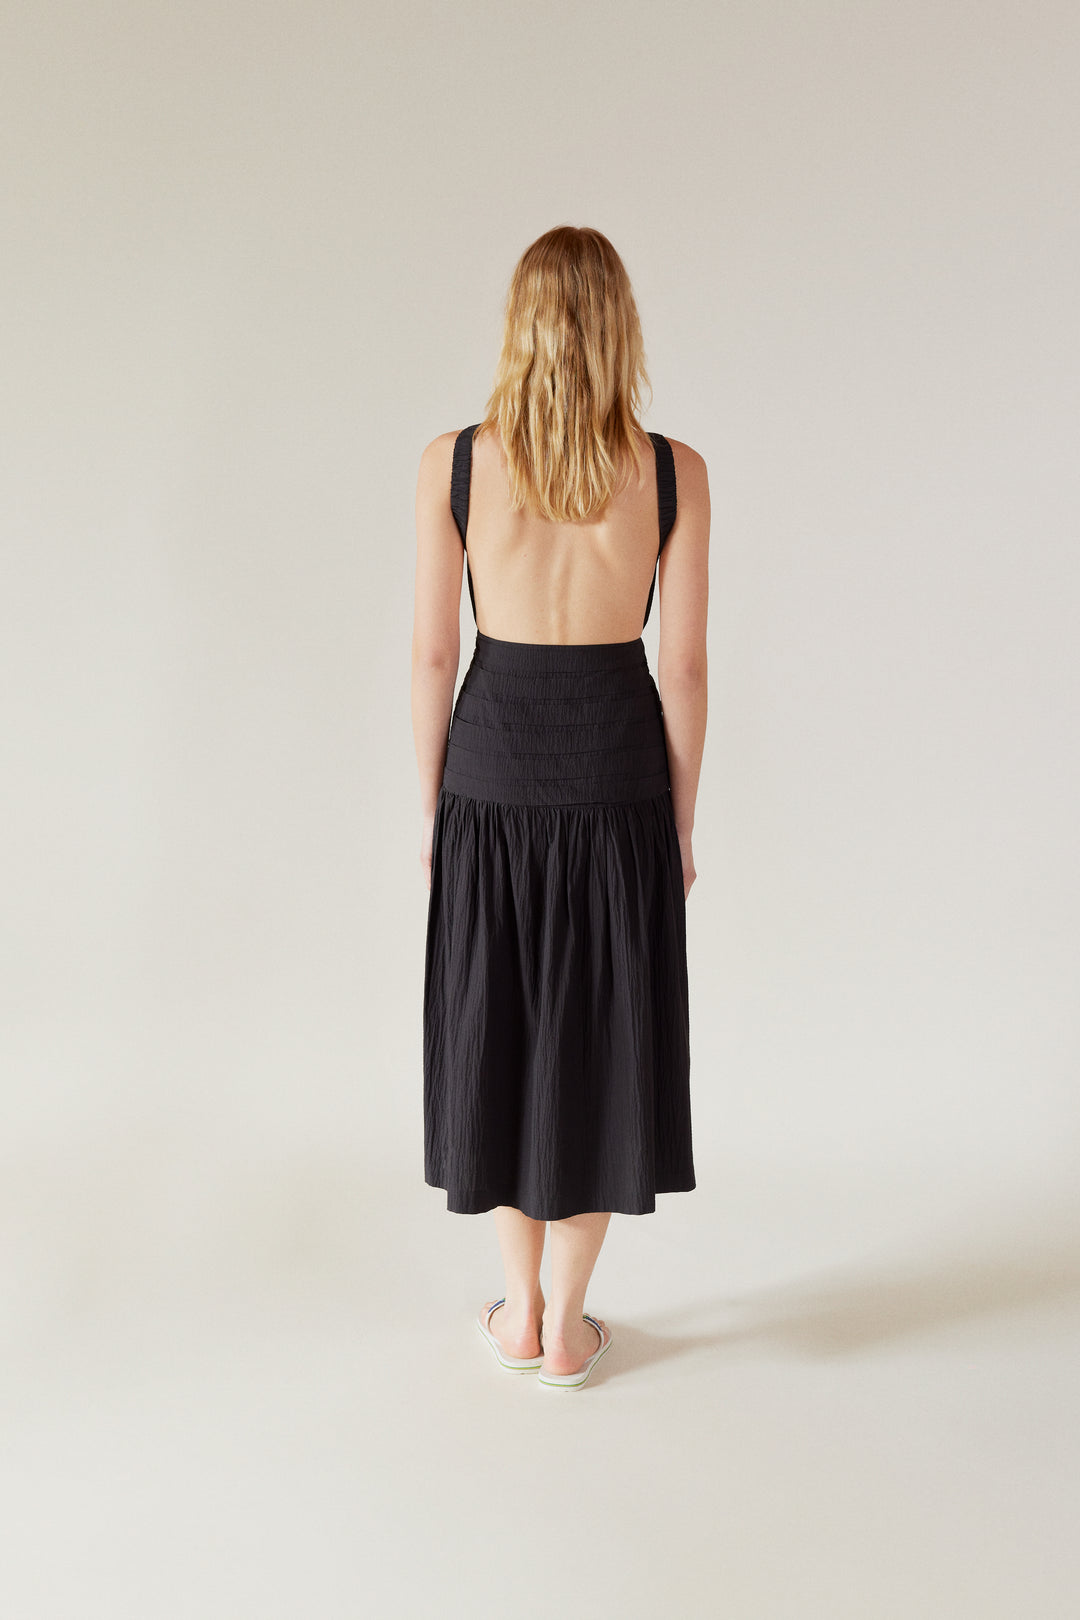 BRUNA - Open Back Midi Black Dress